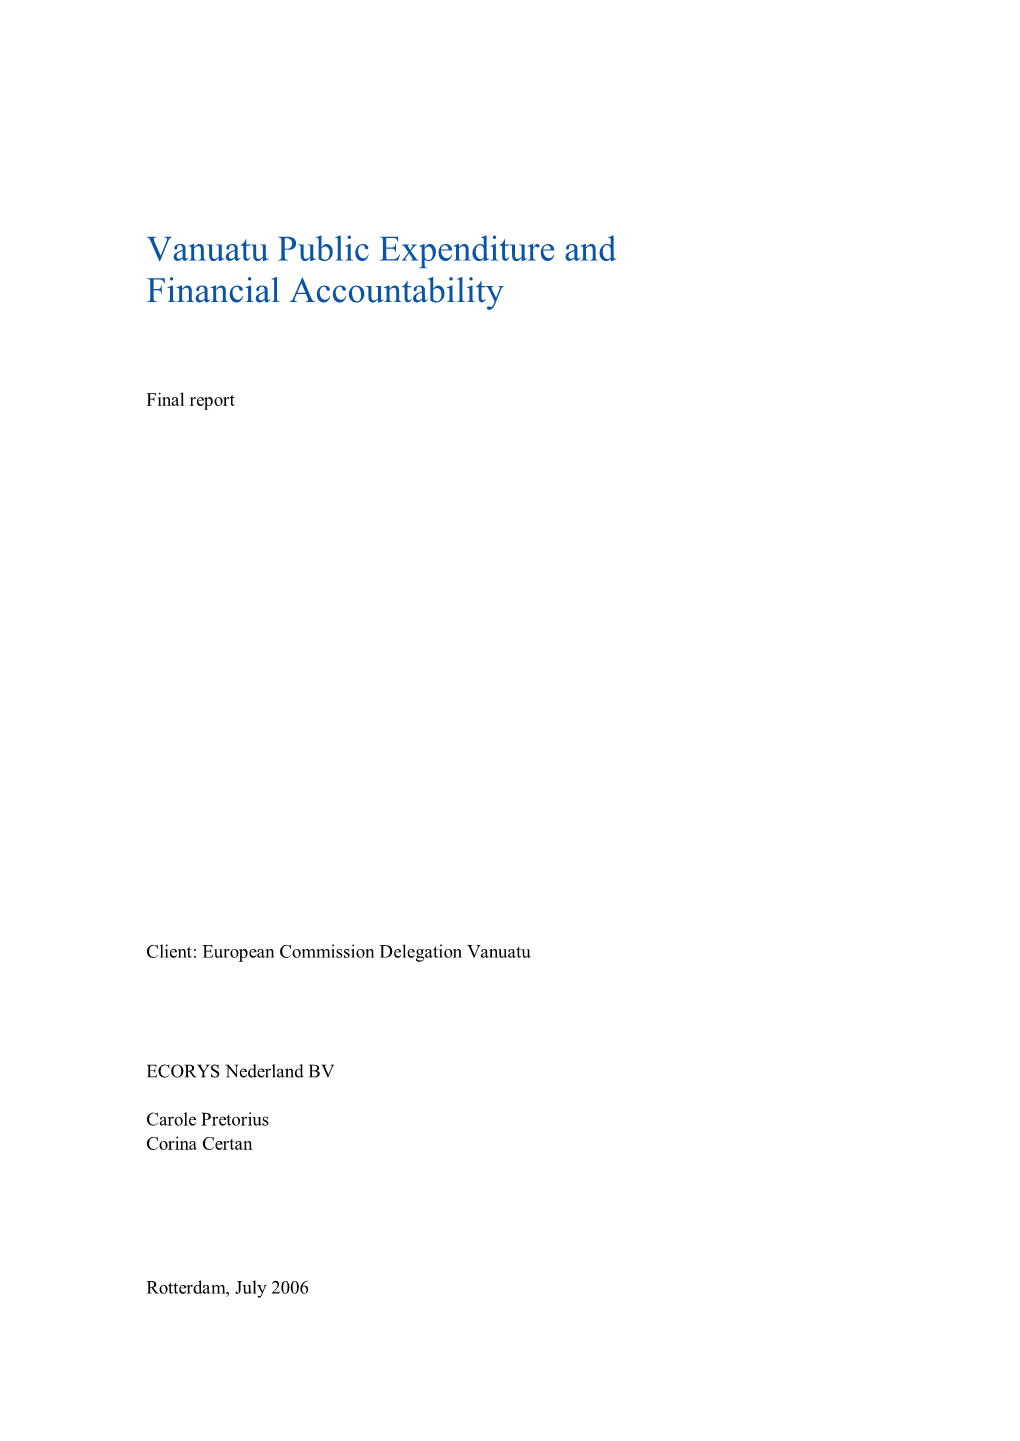 Vanuatu Public Expenditure and Financial Accountability